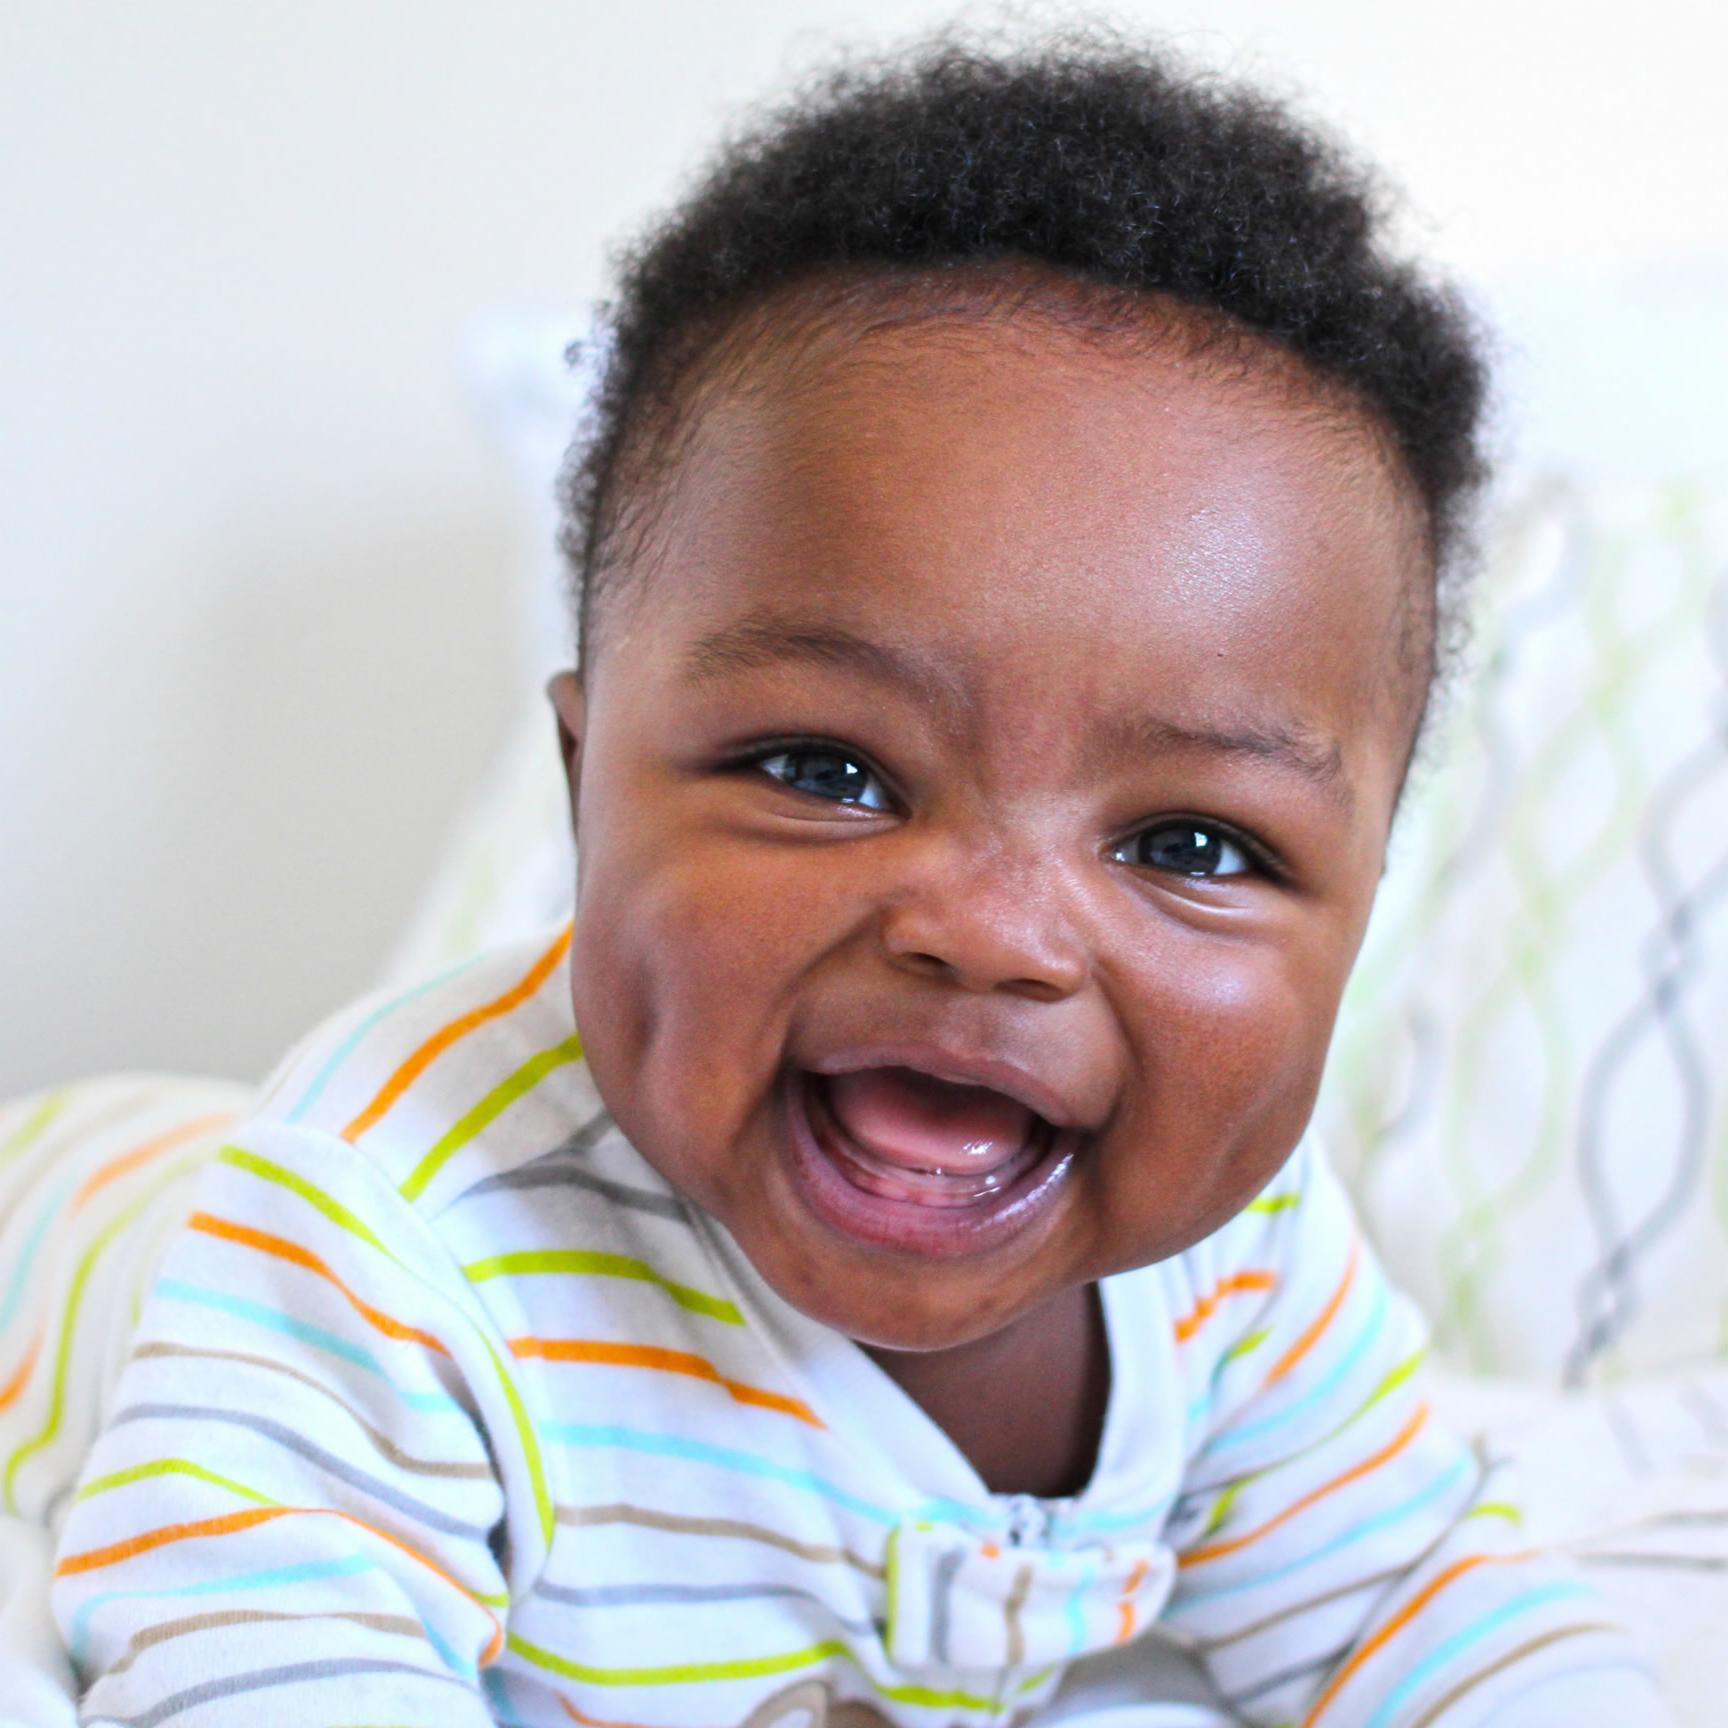 DEVELOPMENTAL SCREENING: Do you know how to track your baby’s developmental milestones?